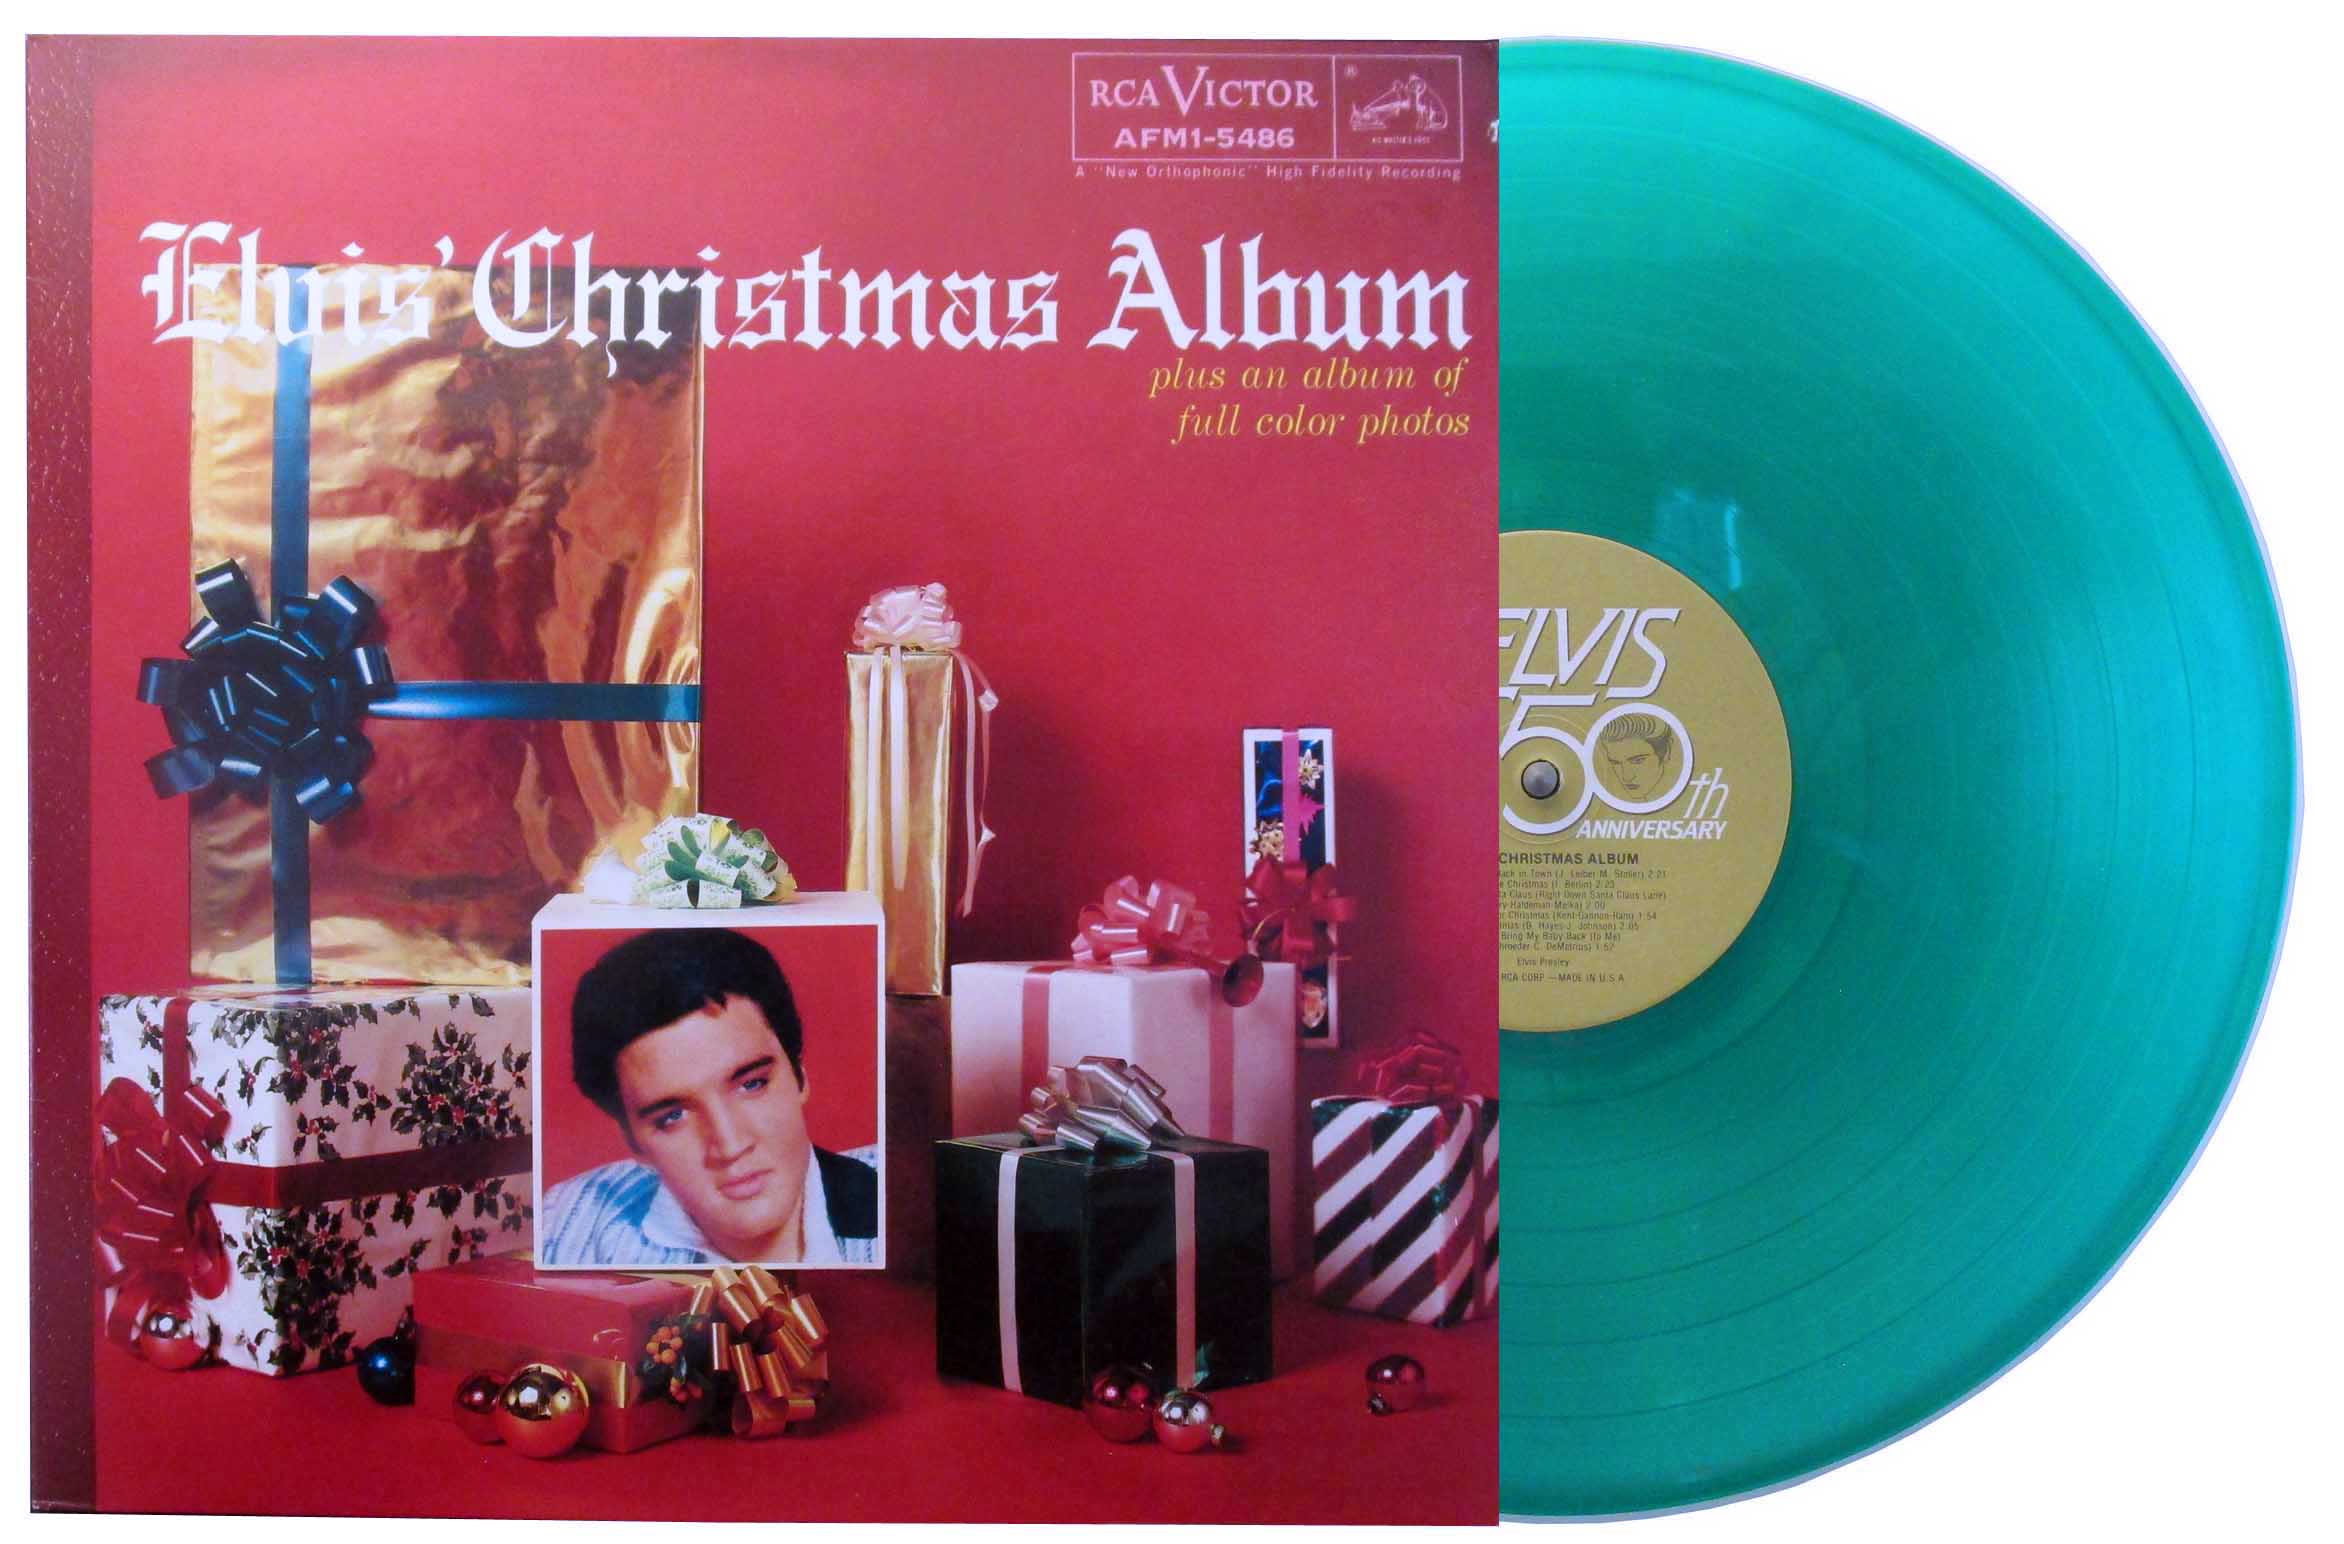 Elvis Presley - Elvis' Christmas Album Exclusive Green Color Vinyl LP